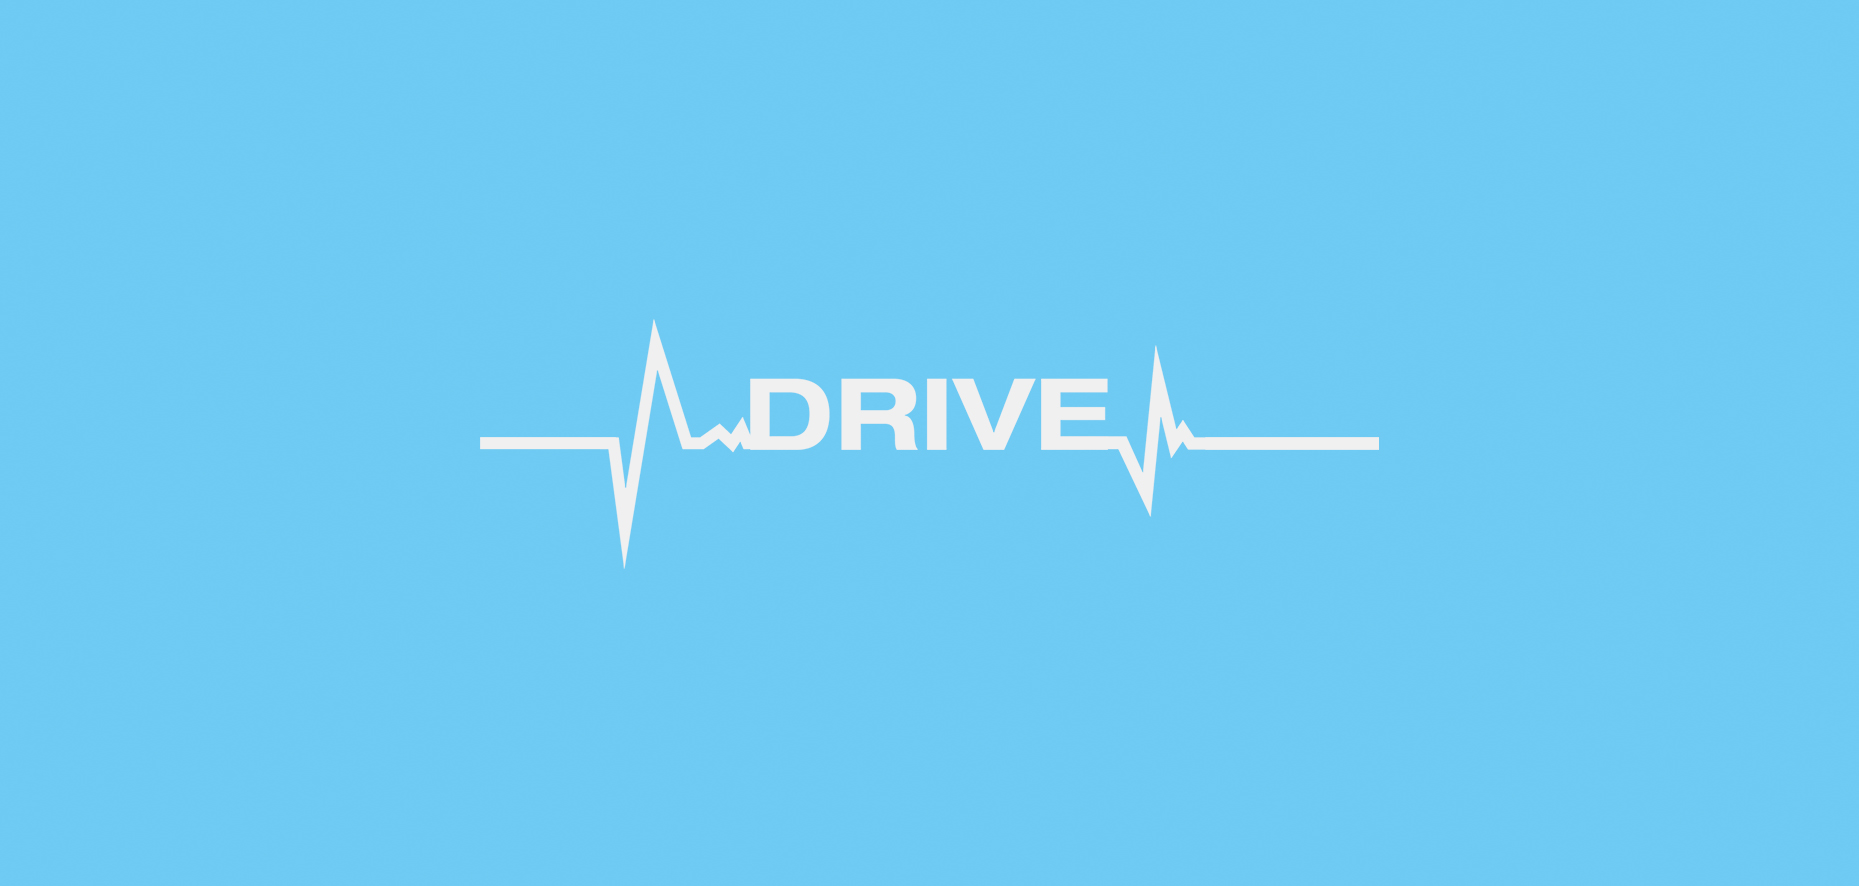 Drive Adherence App